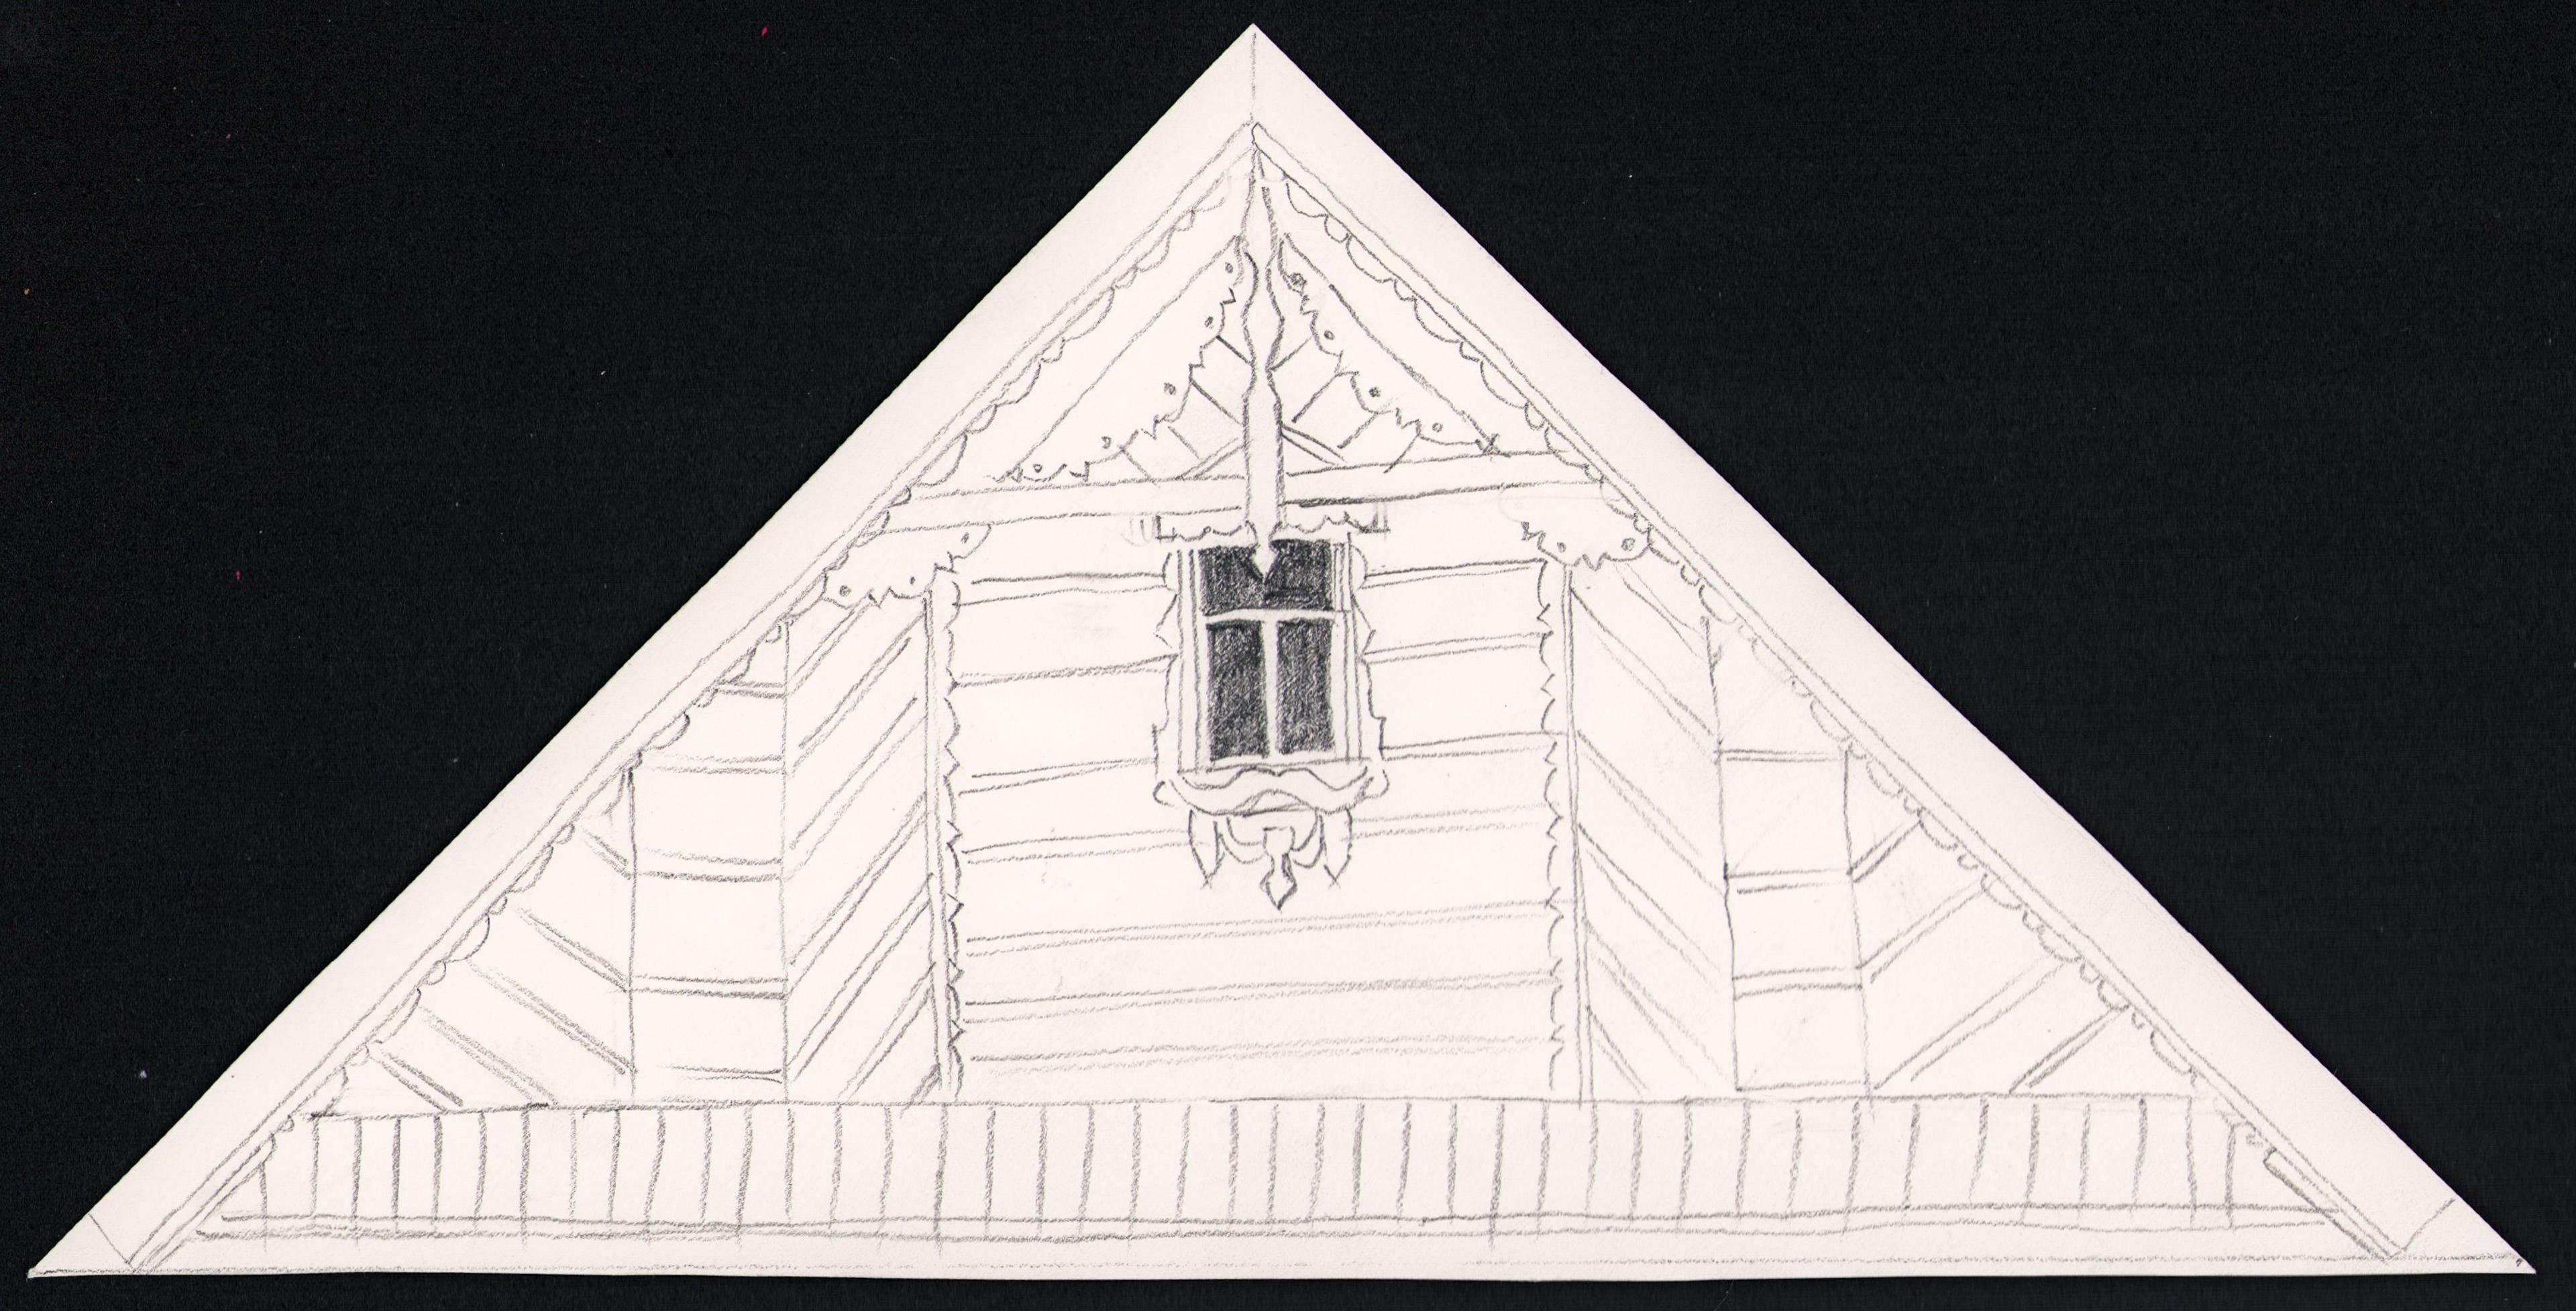 Zburazh house detail by Urbach